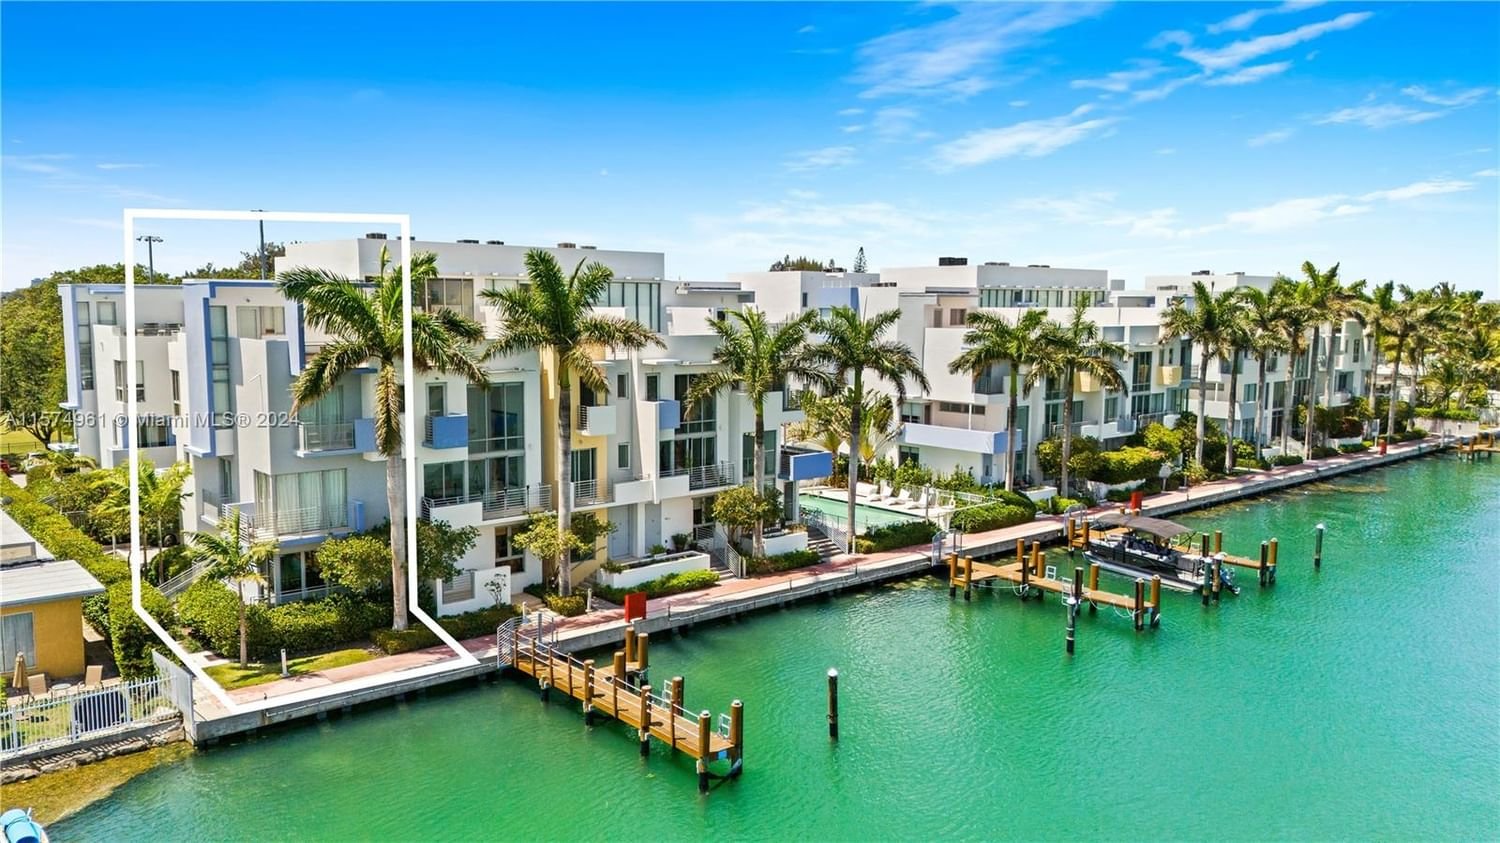 Real estate property located at 155 Shore Dr #1, Miami-Dade County, NORMANDY GOLF COURSE, Miami Beach, FL